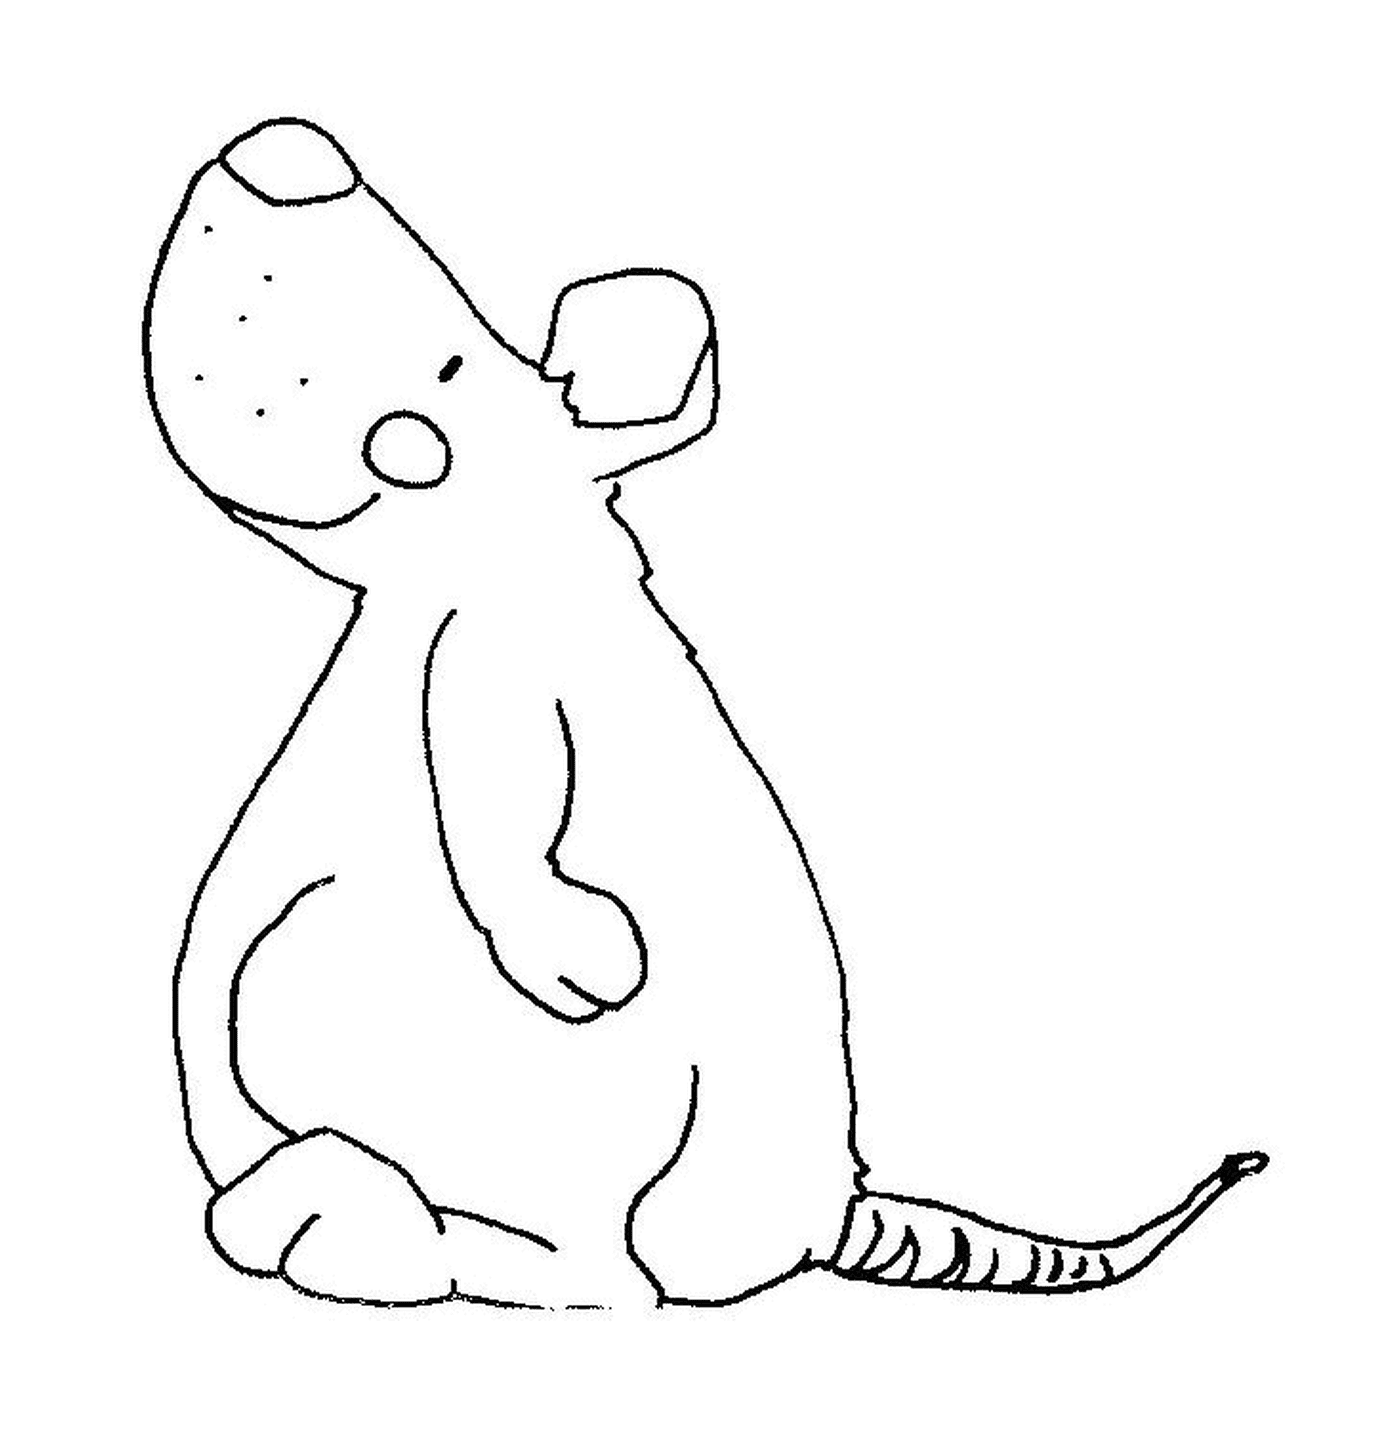   Une grosse souris 